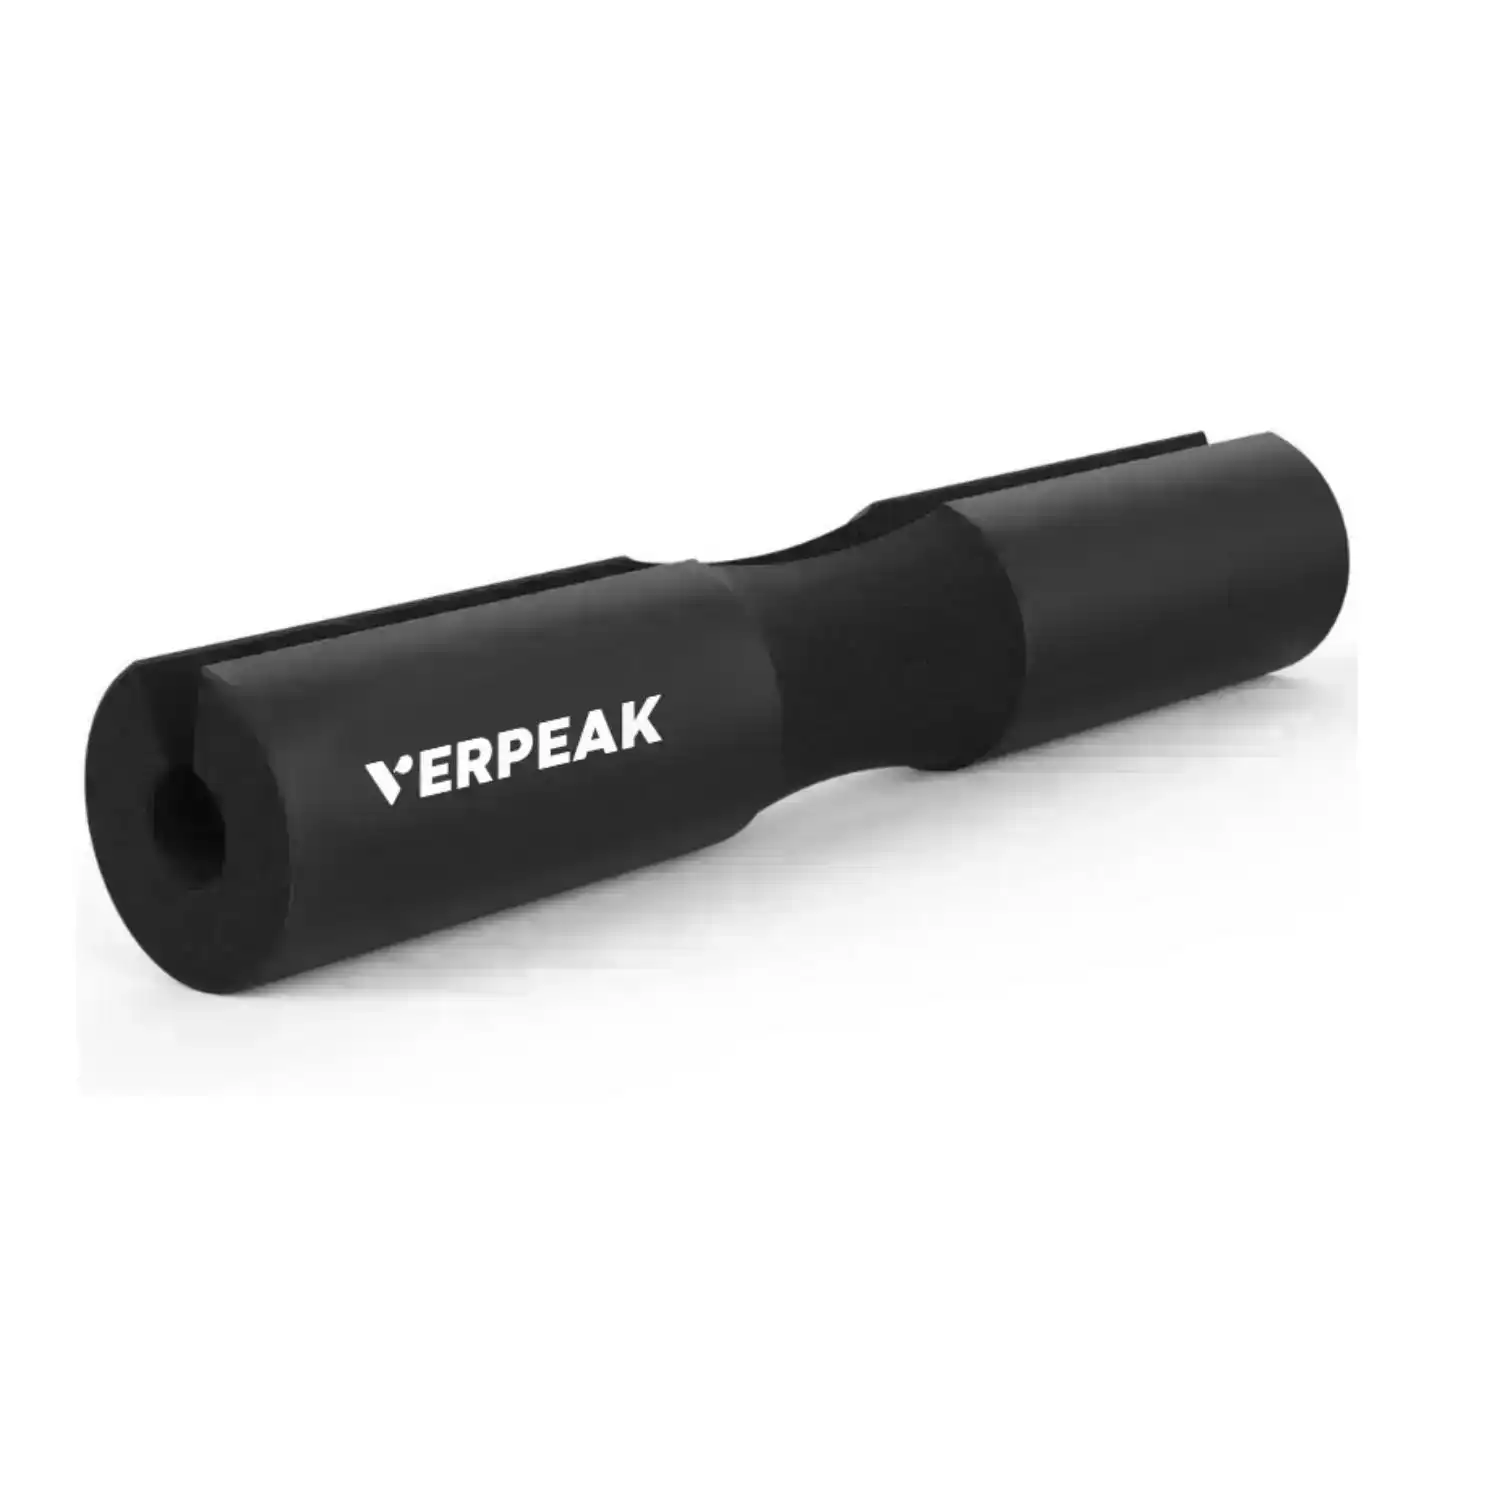 Verpeak Barbell Squat Pad Lightweight Portable Anti-Slip Material Black